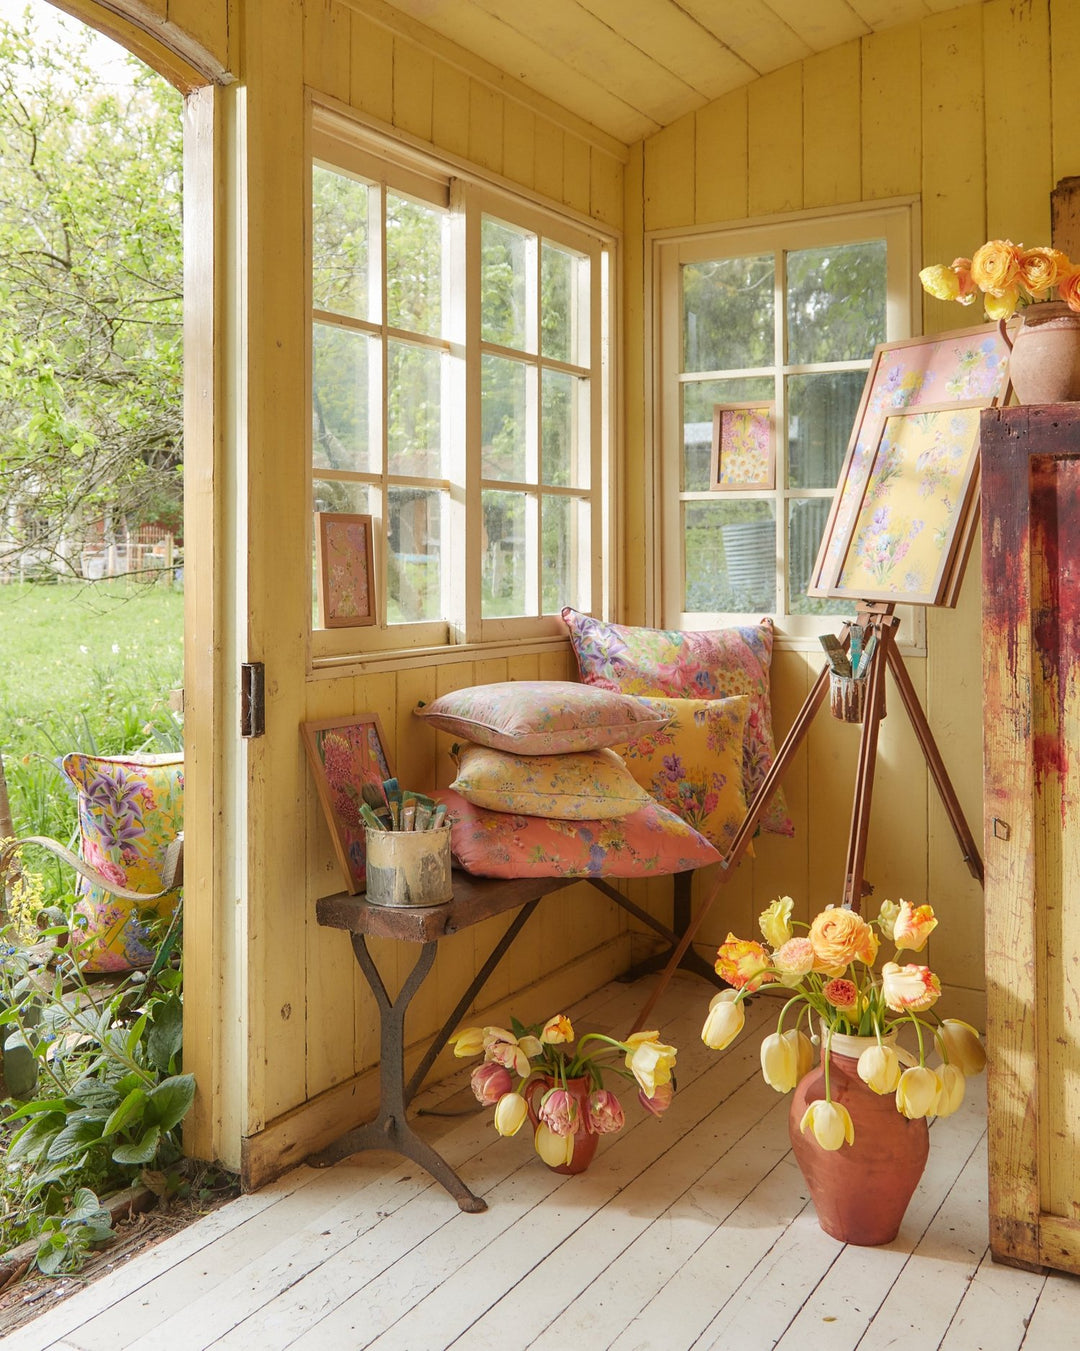 bauldry-botanicals-hopeful-beginnings-100%-cotton-sheer-fabric-voile-intricate-subtle-delicate-floral-print-dainty-flowers-spring-summer-interior-cottage-art-studio-yellow-garden-room